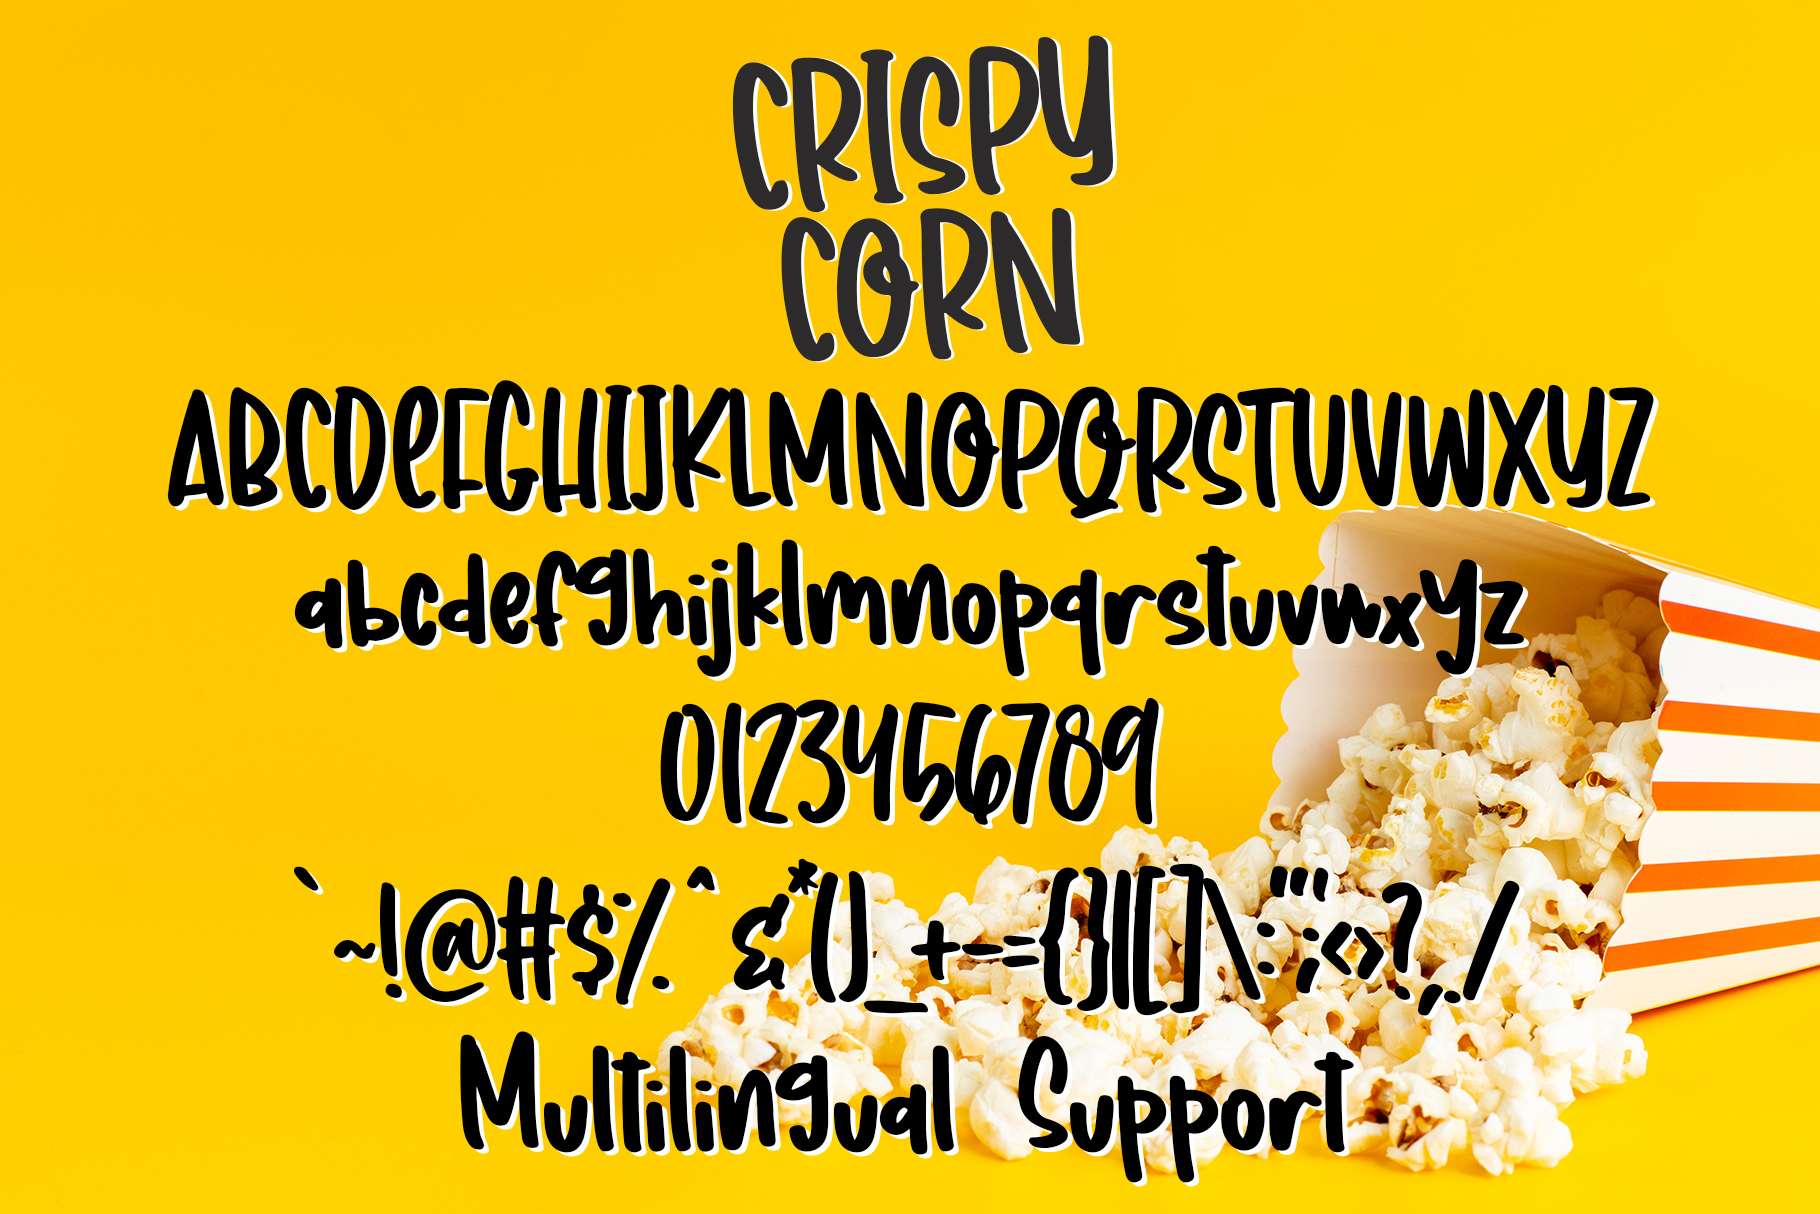 Crispy Corn